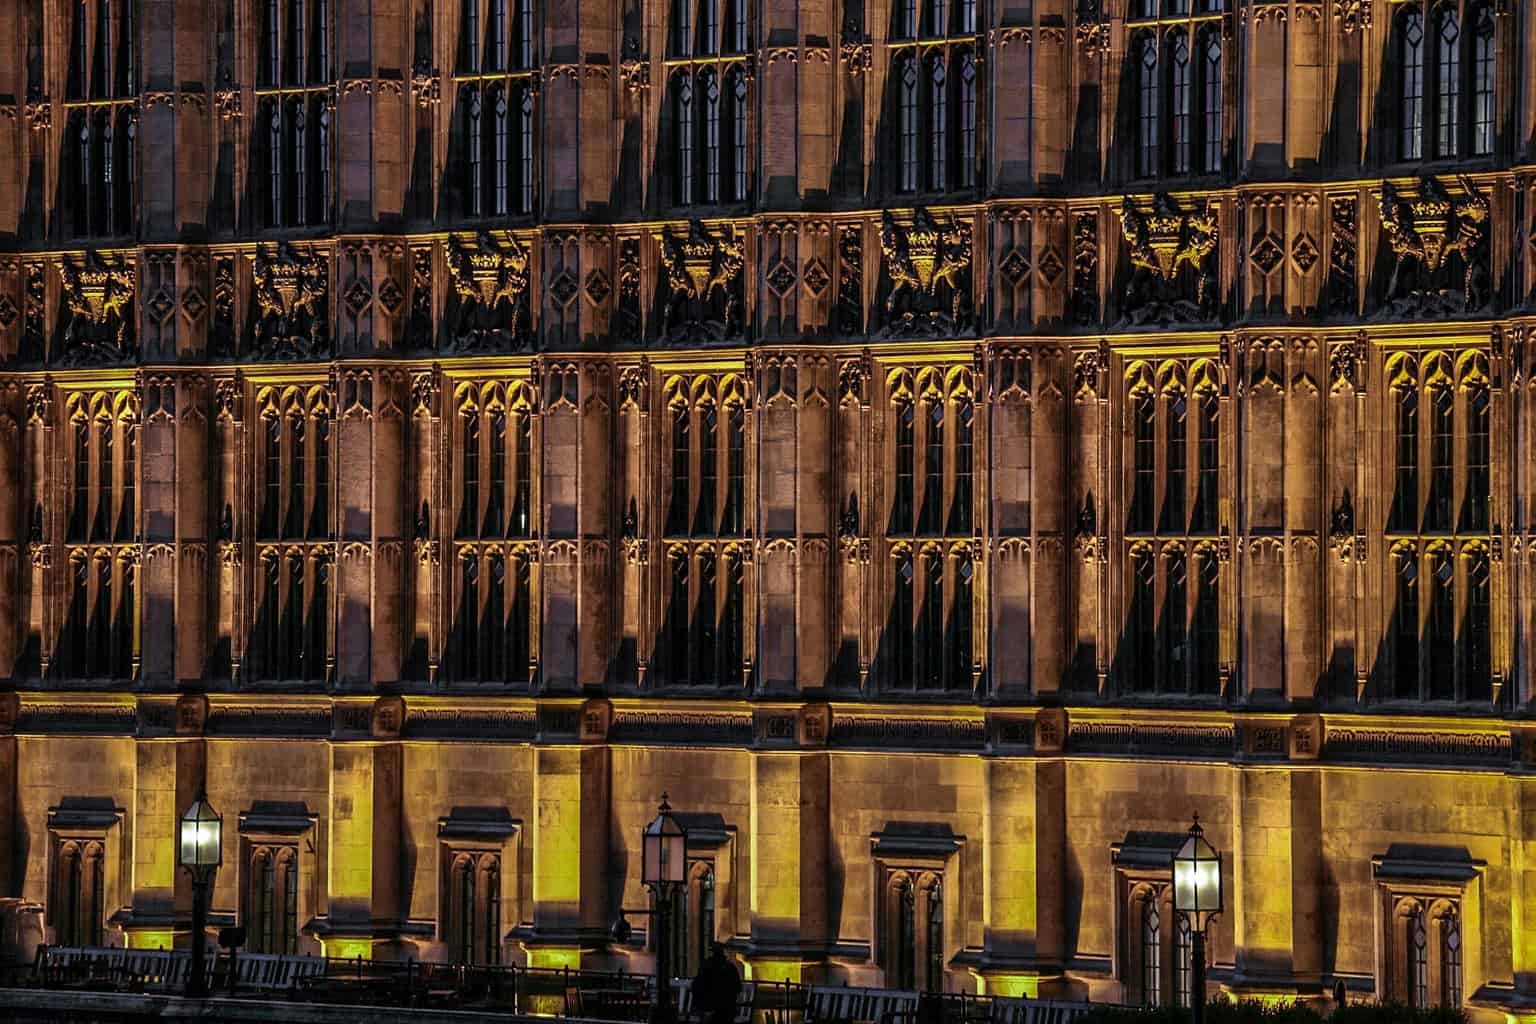  The Palace of Wesminster - detail shot - Rick McEvoy London Photographer 